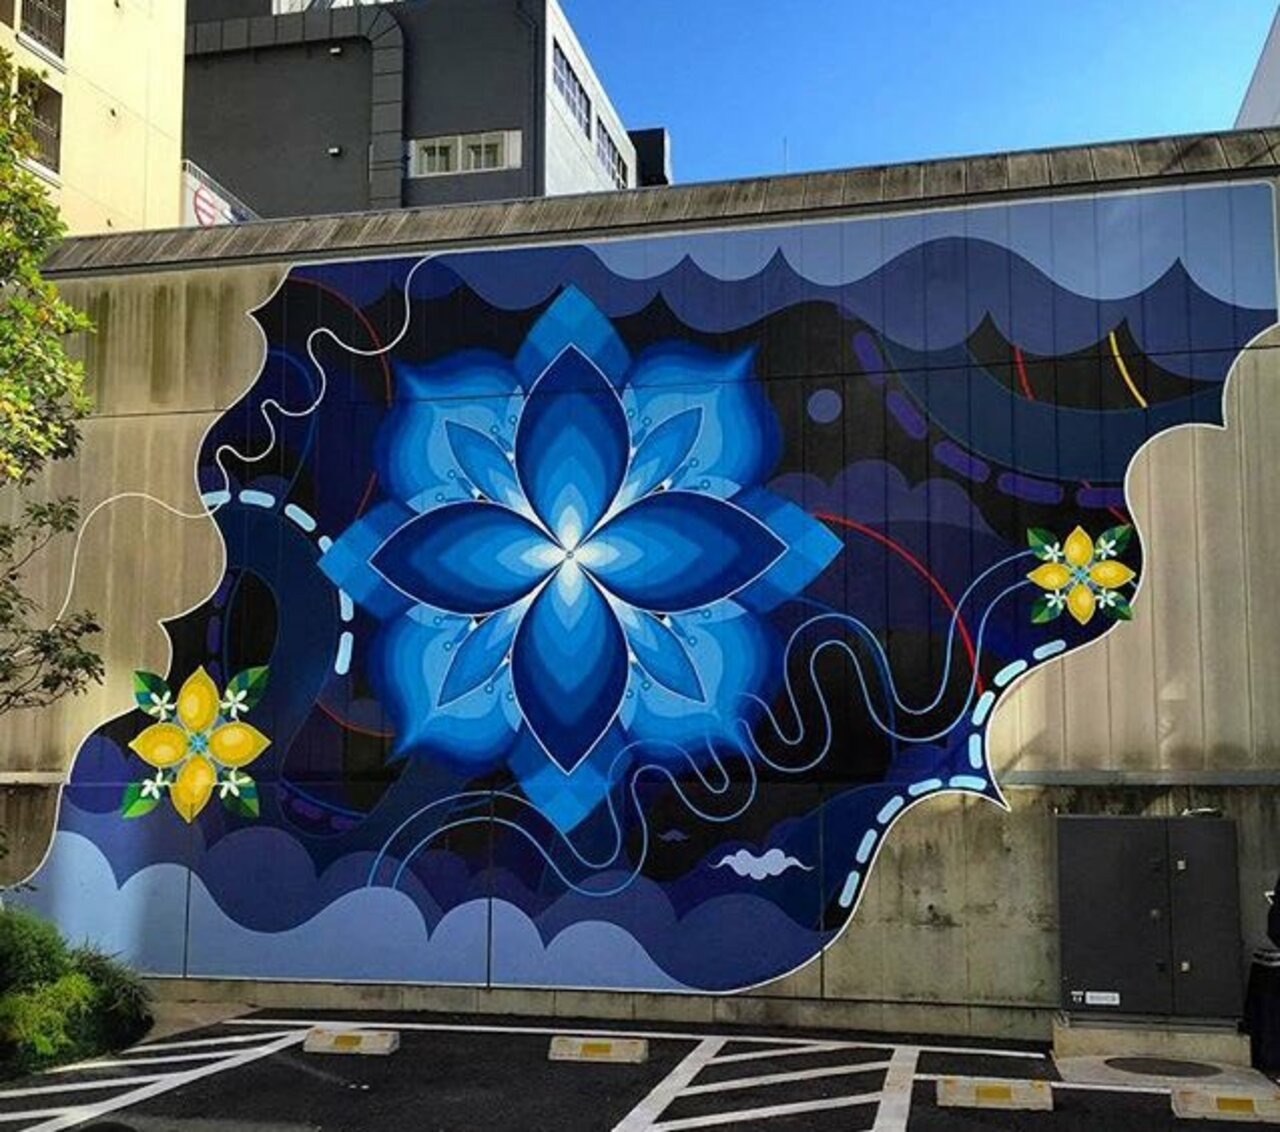 New Street Art by htzk, kami_htzk + sasu_lyri 

#art #graffiti #mural #streetart https://t.co/NuVbMSuQzX